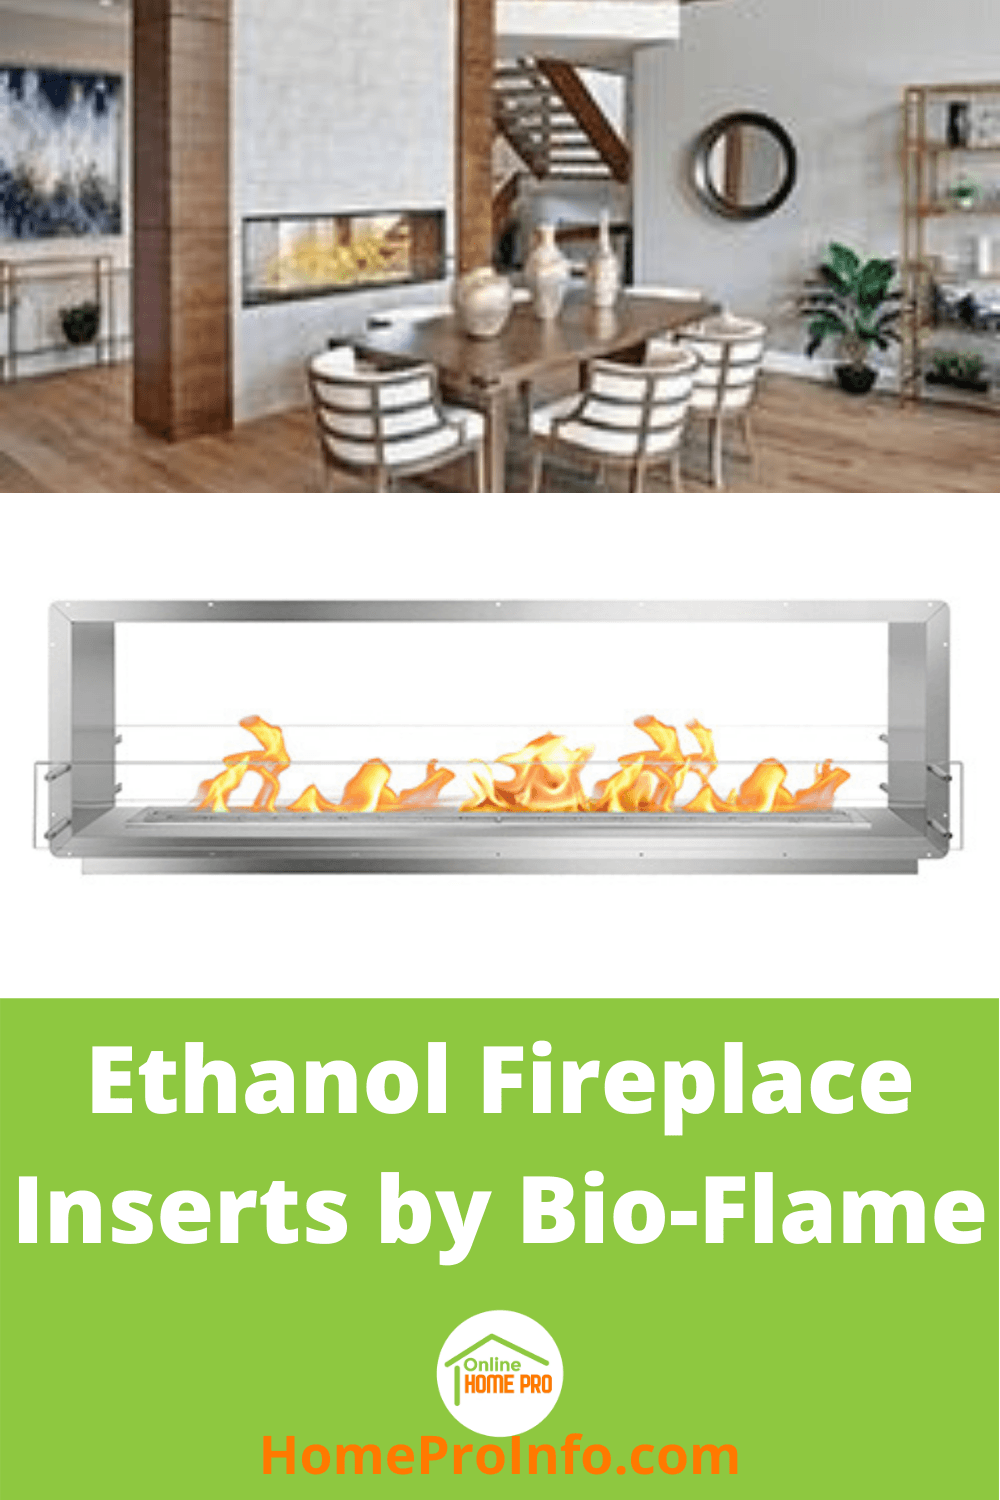 ethanol fireplace insert stainless steel